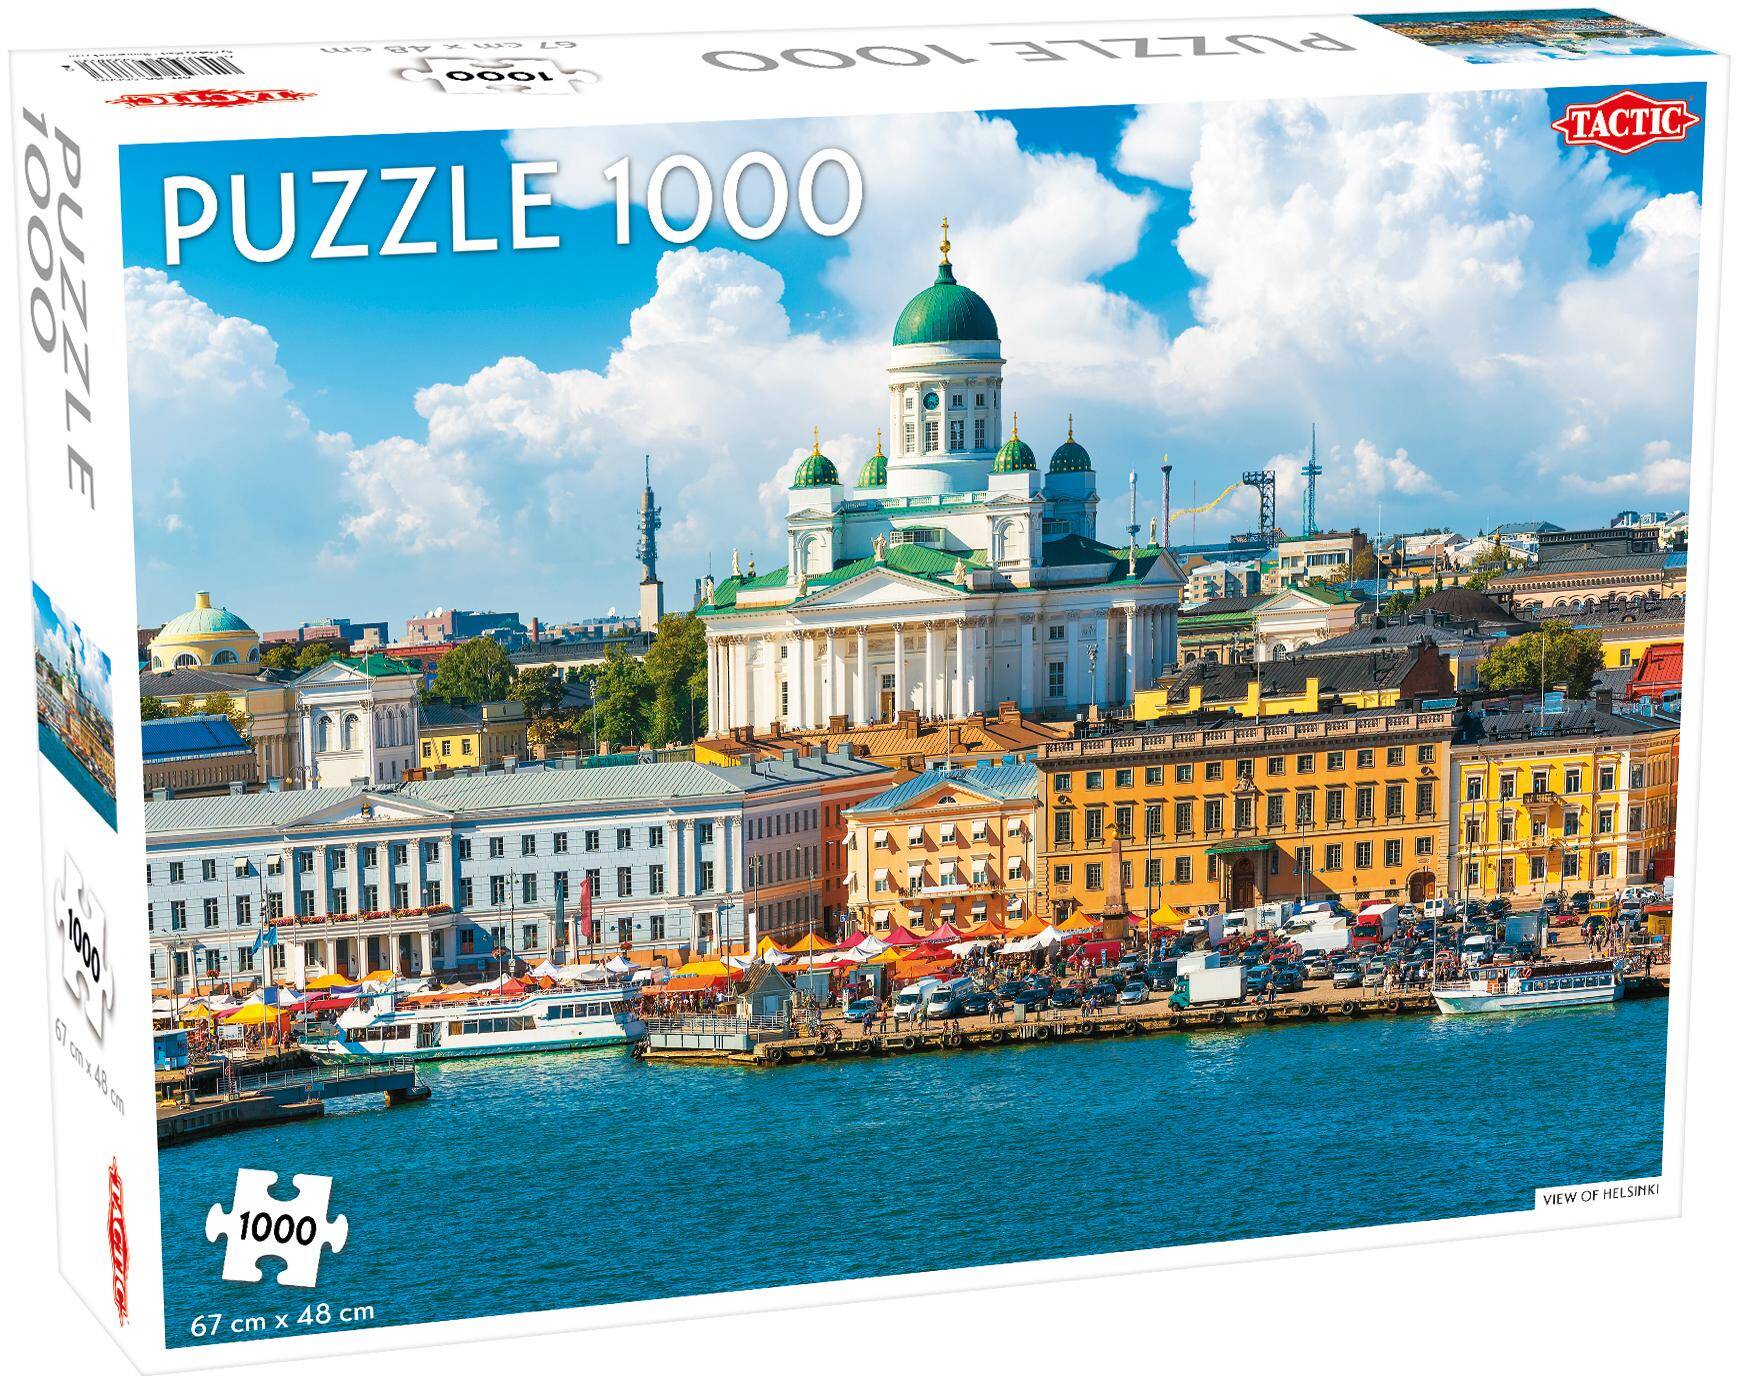 Puzzle 1000 Around the World Northern Stars View of Helsinki